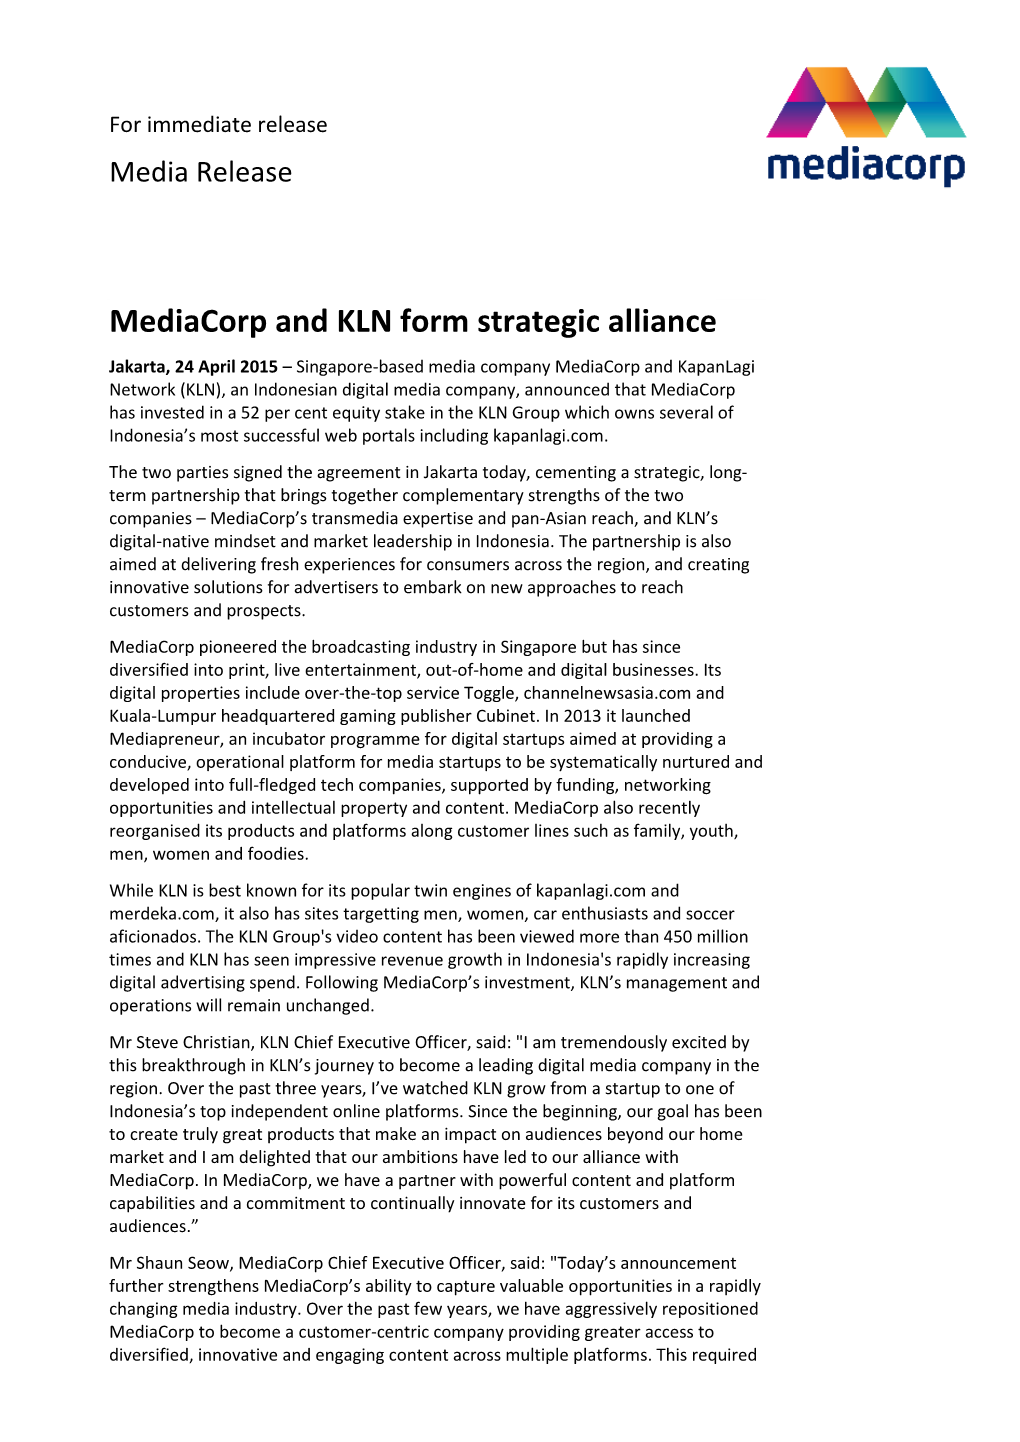 Mediacorp and KLN Form Strategic Alliance